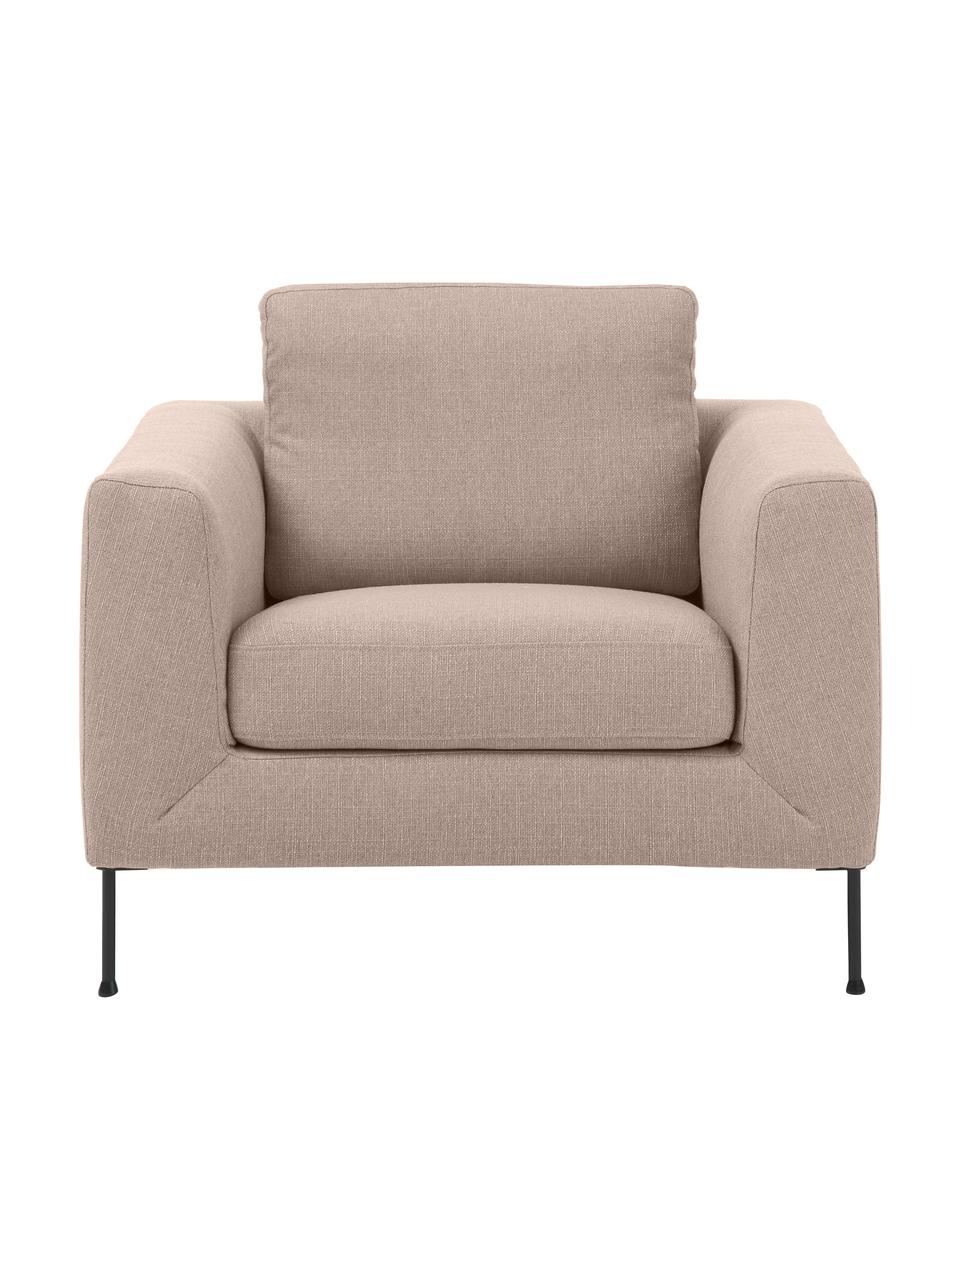 Sofa-Sessel Cucita in Taupe mit Metall-Füßen, Bezug: Webstoff (100% Polyester), Gestell: Massives Kiefernholz, FSC, Füße: Metall, lackiert, Webstoff Taupe, B 98 x T 94 cm